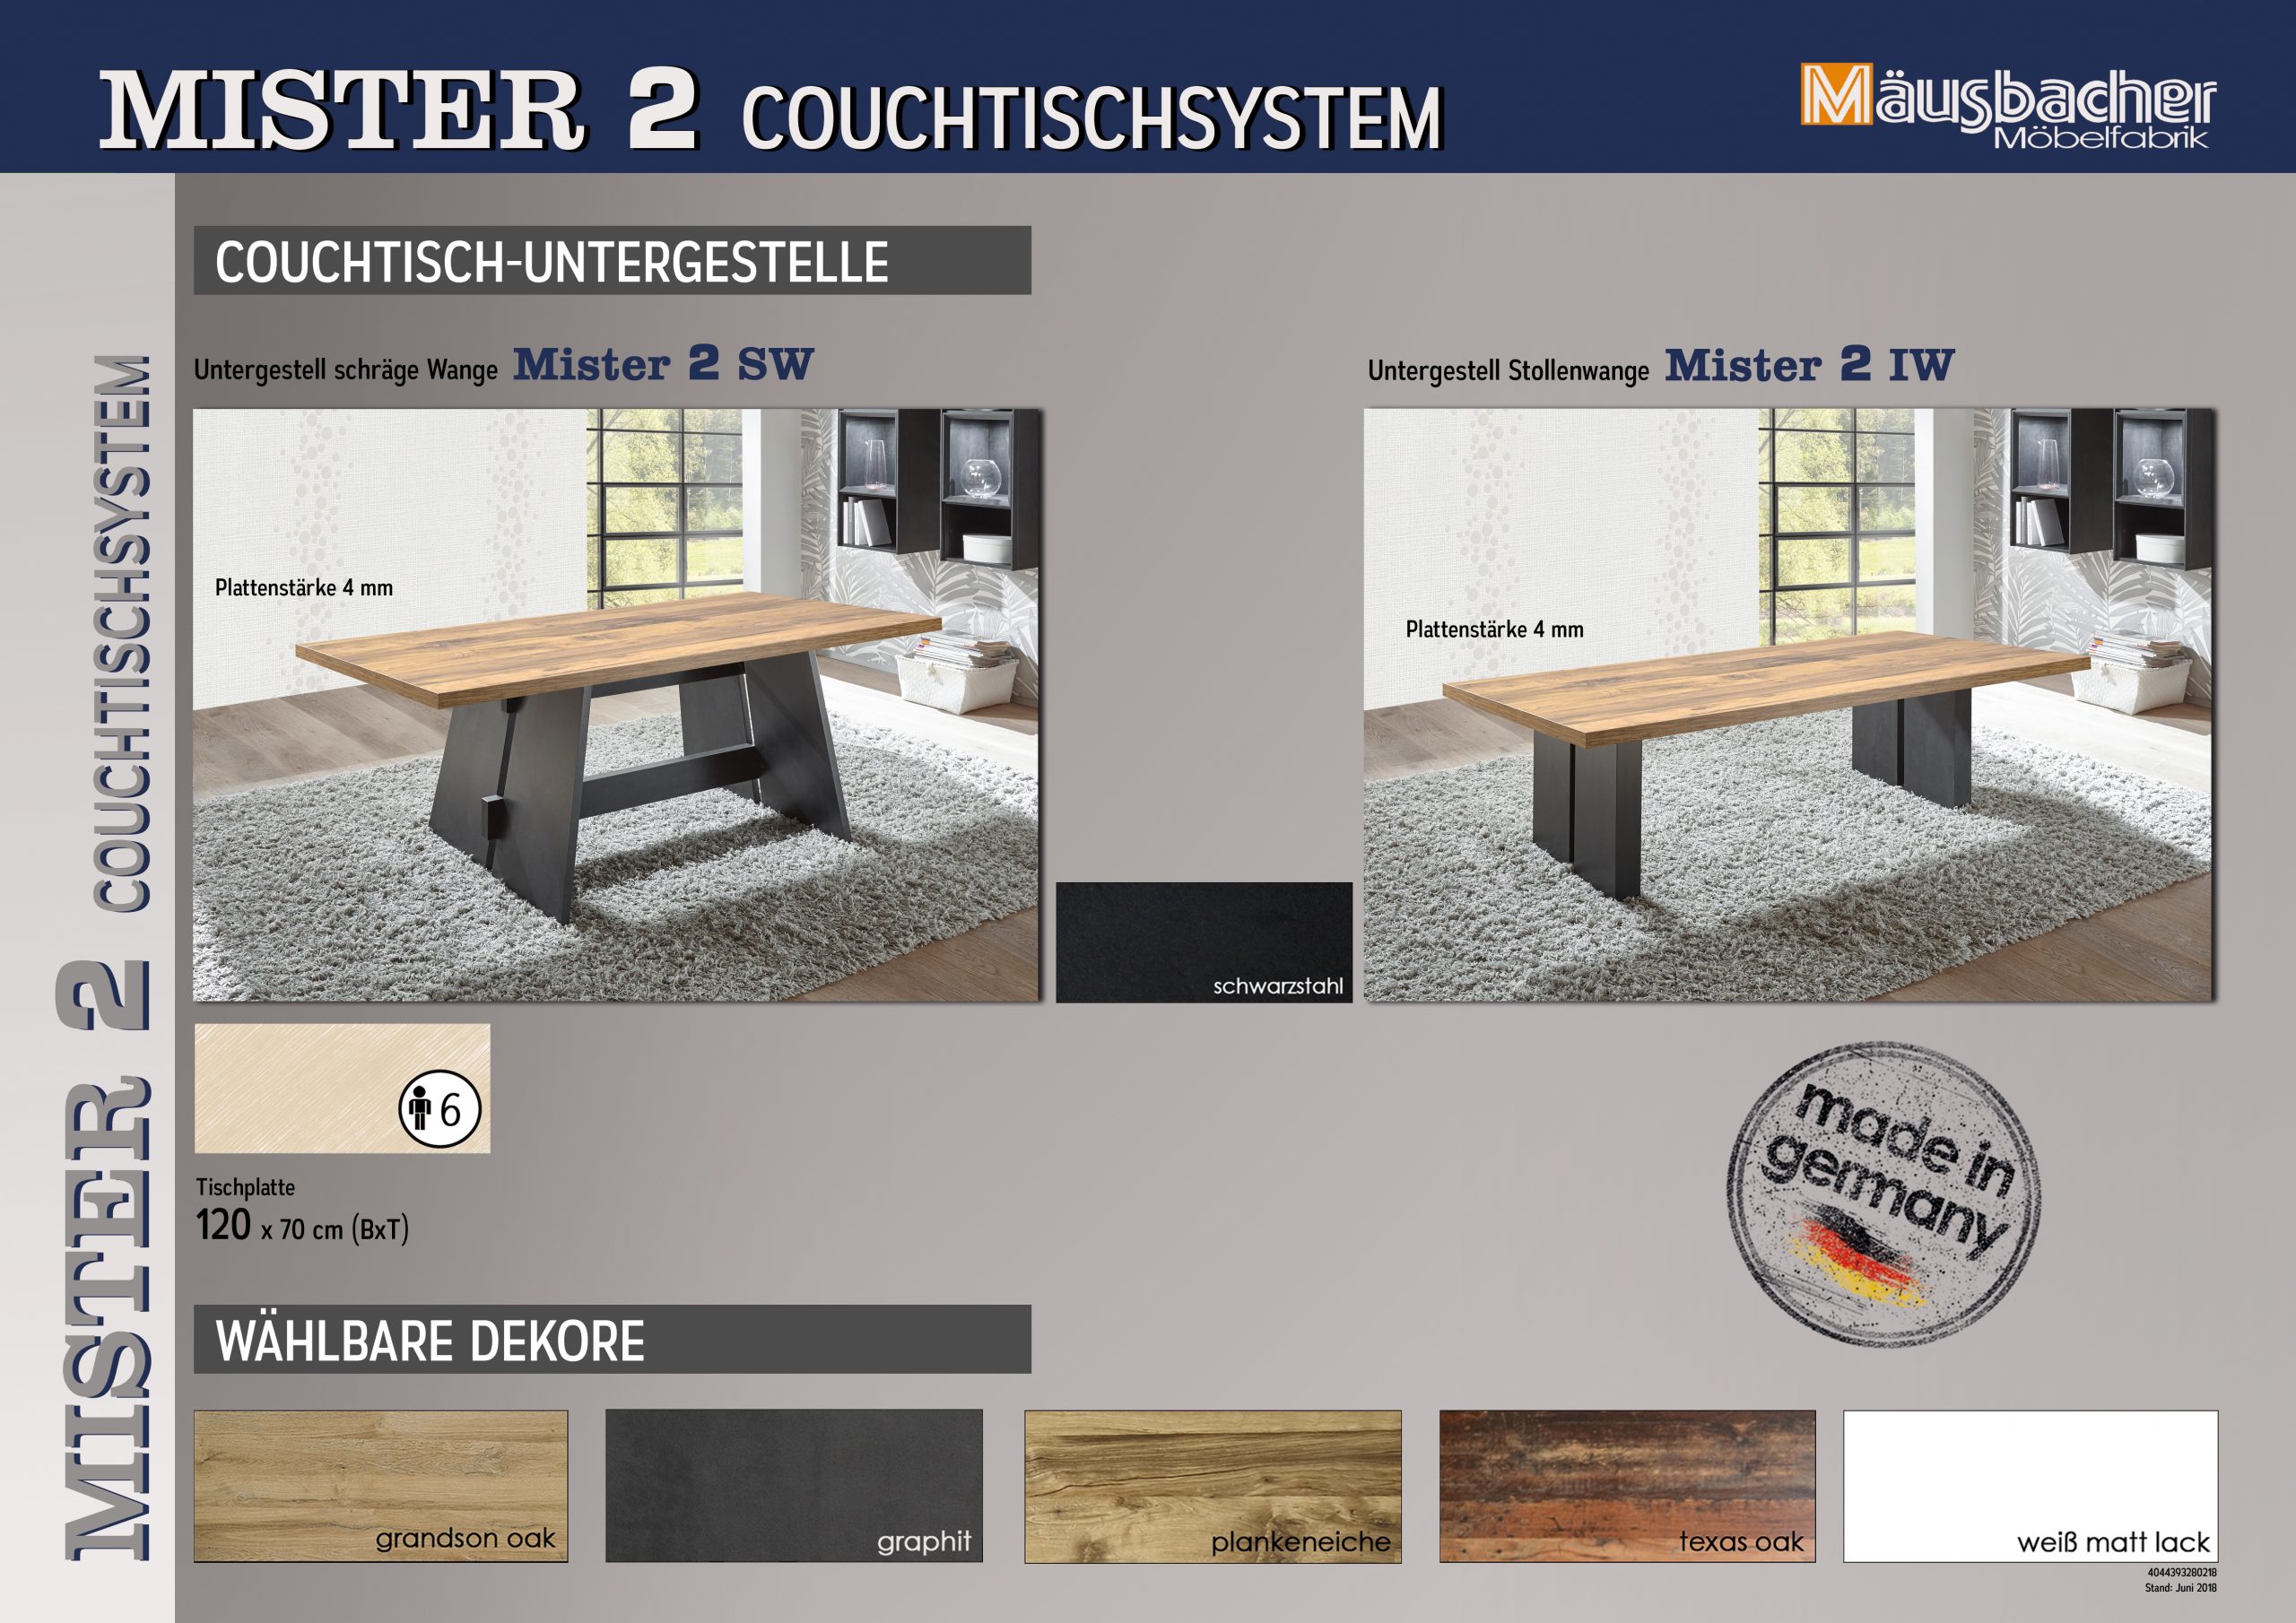 Couchtisch „Mister Lukas“ - and Möbis « frei Mäusbacher made by konfigurierbar More - in Germany